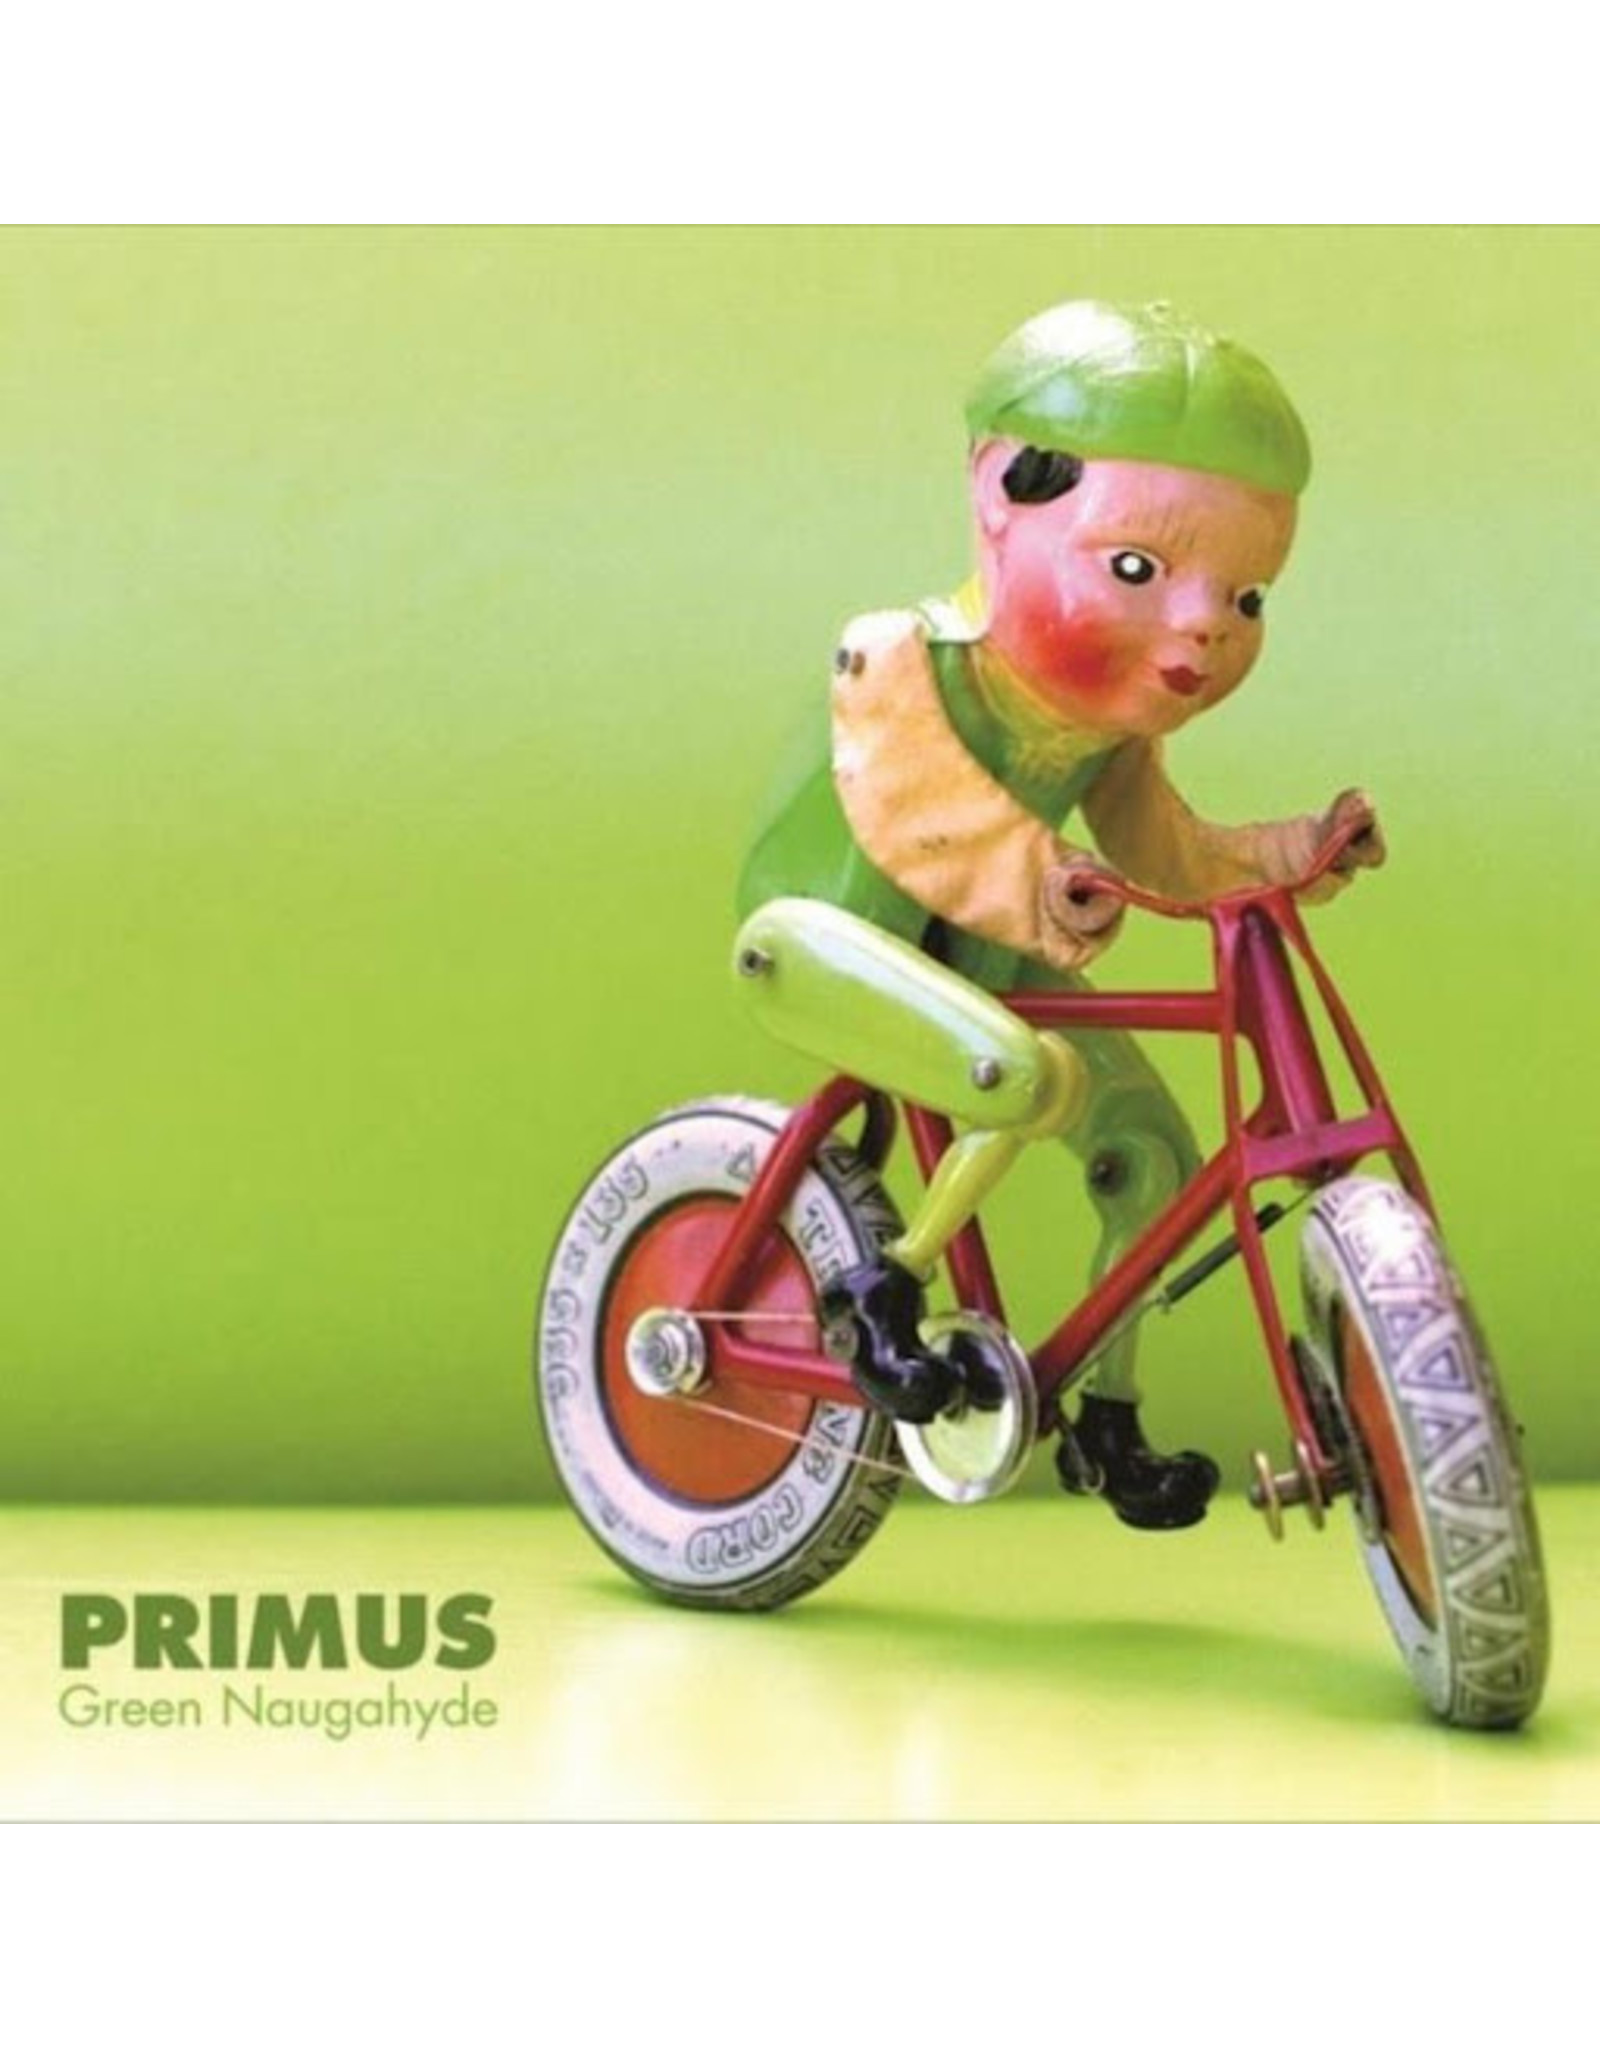 Primus - Green Naugahyde 2LP (10th Anniversary Deluxe Edition on Green Vinyl)